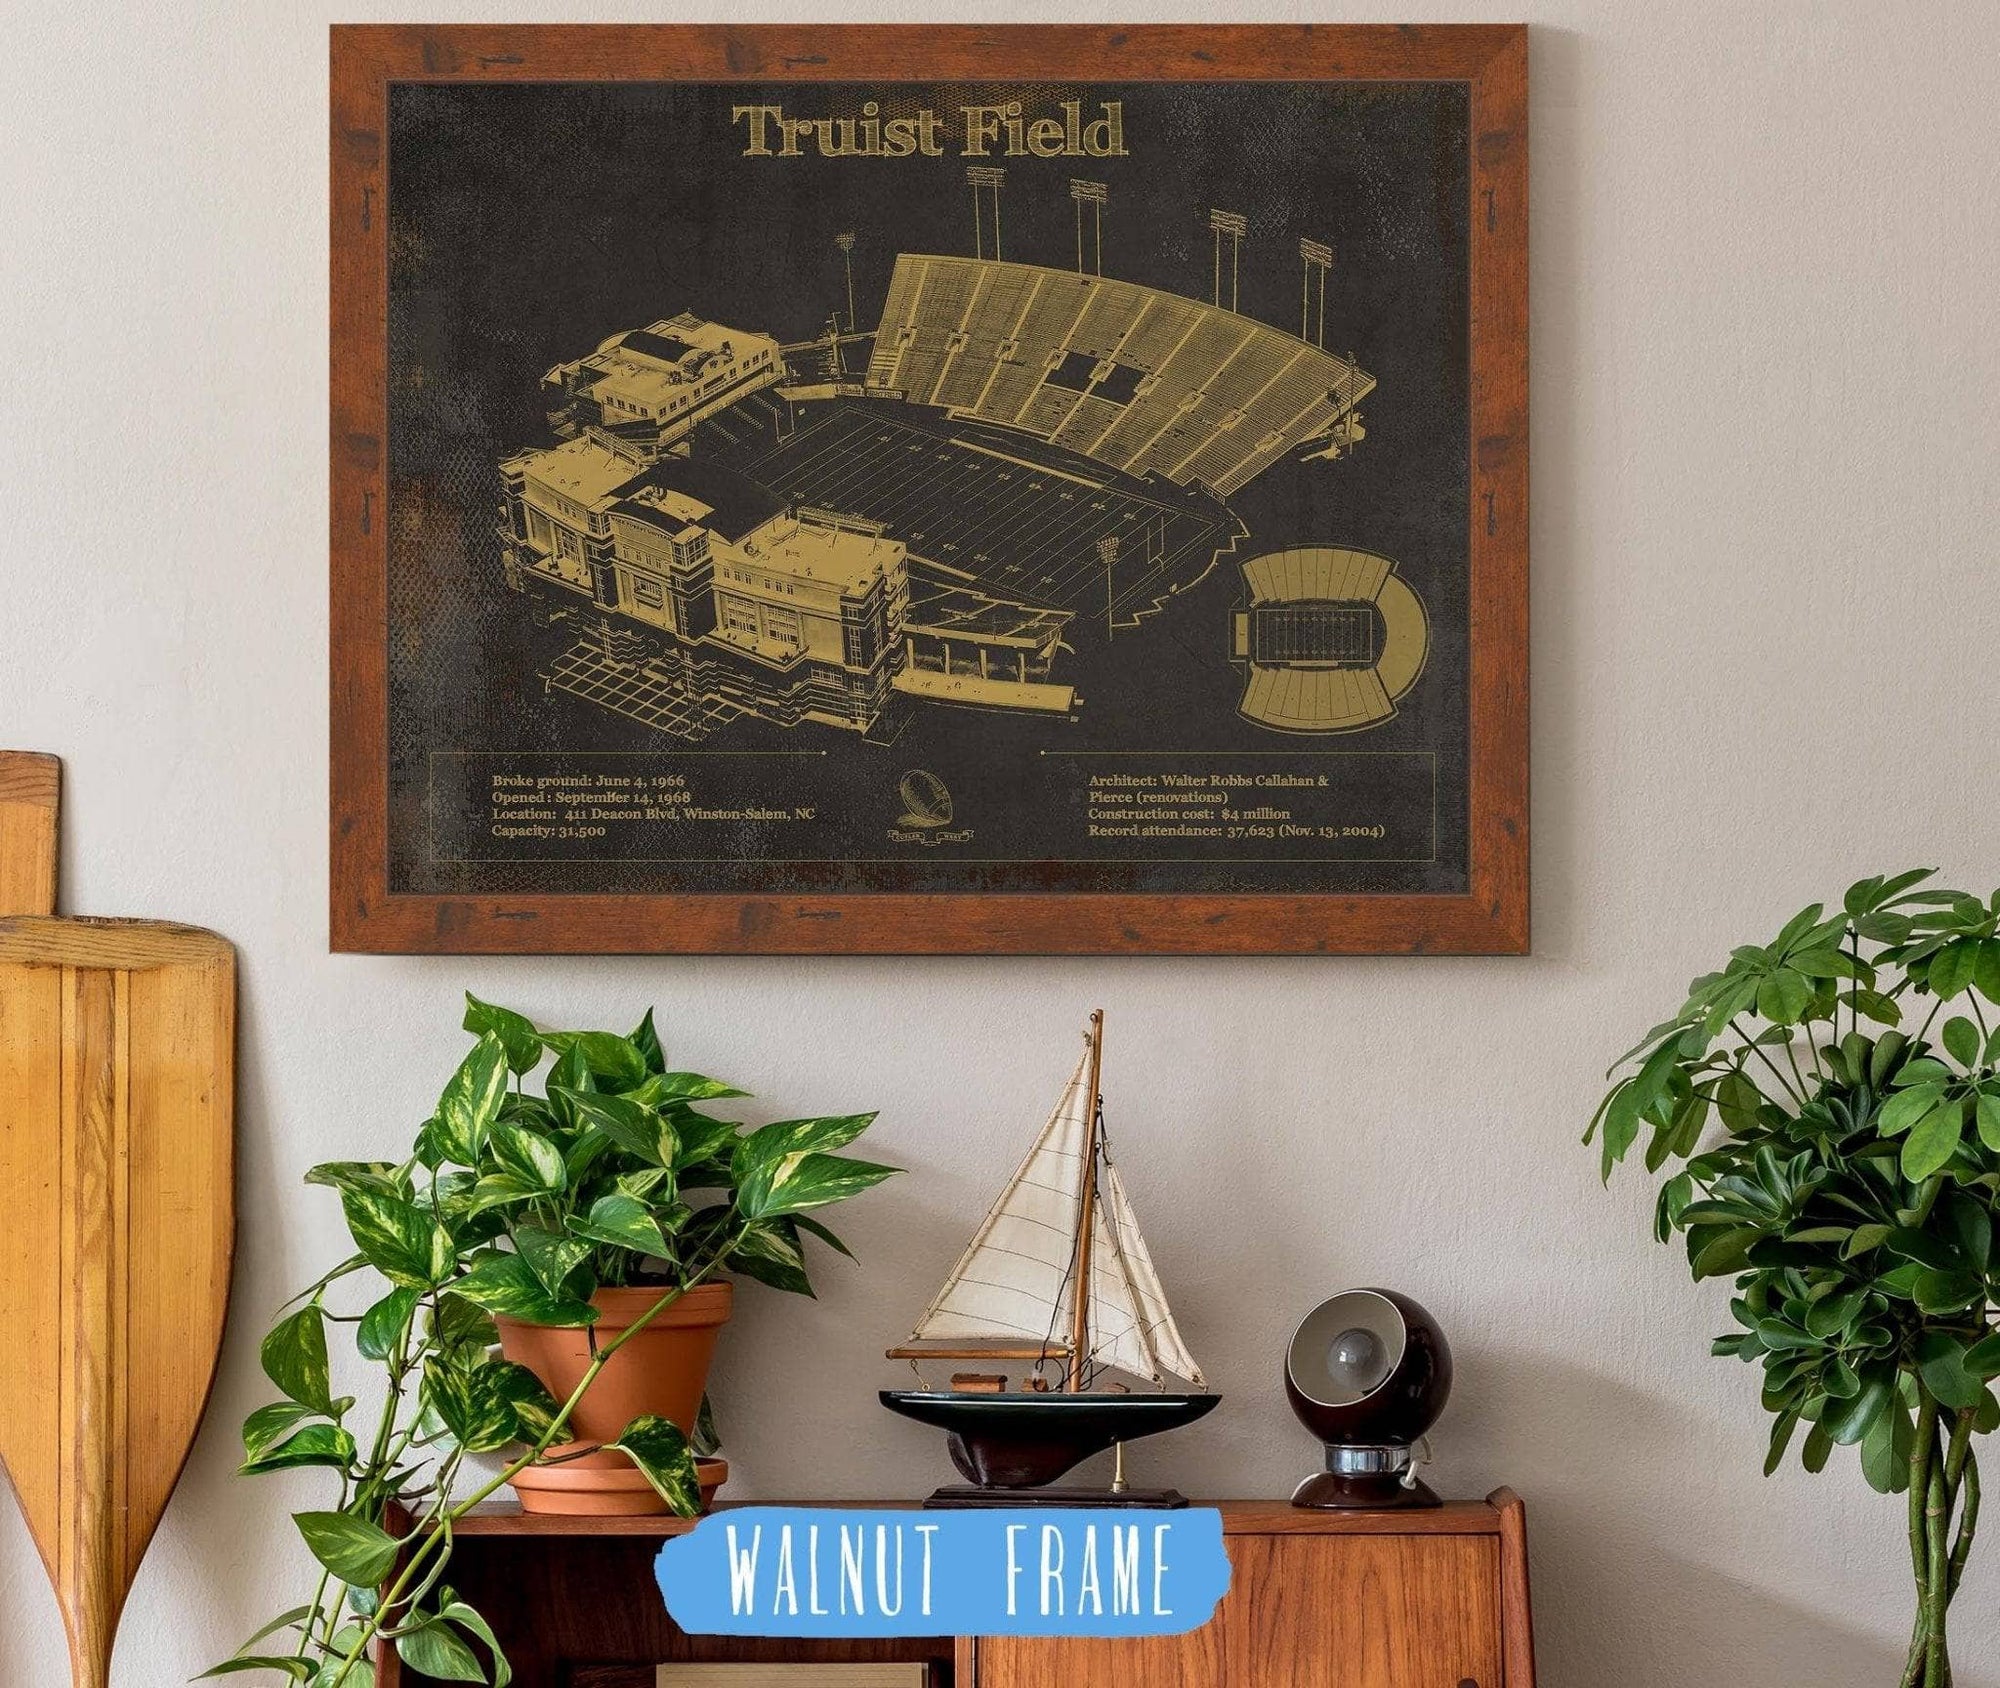 Cutler West College Football Collection Wake Forest Football Art - Truist Field Vintage Wall Art